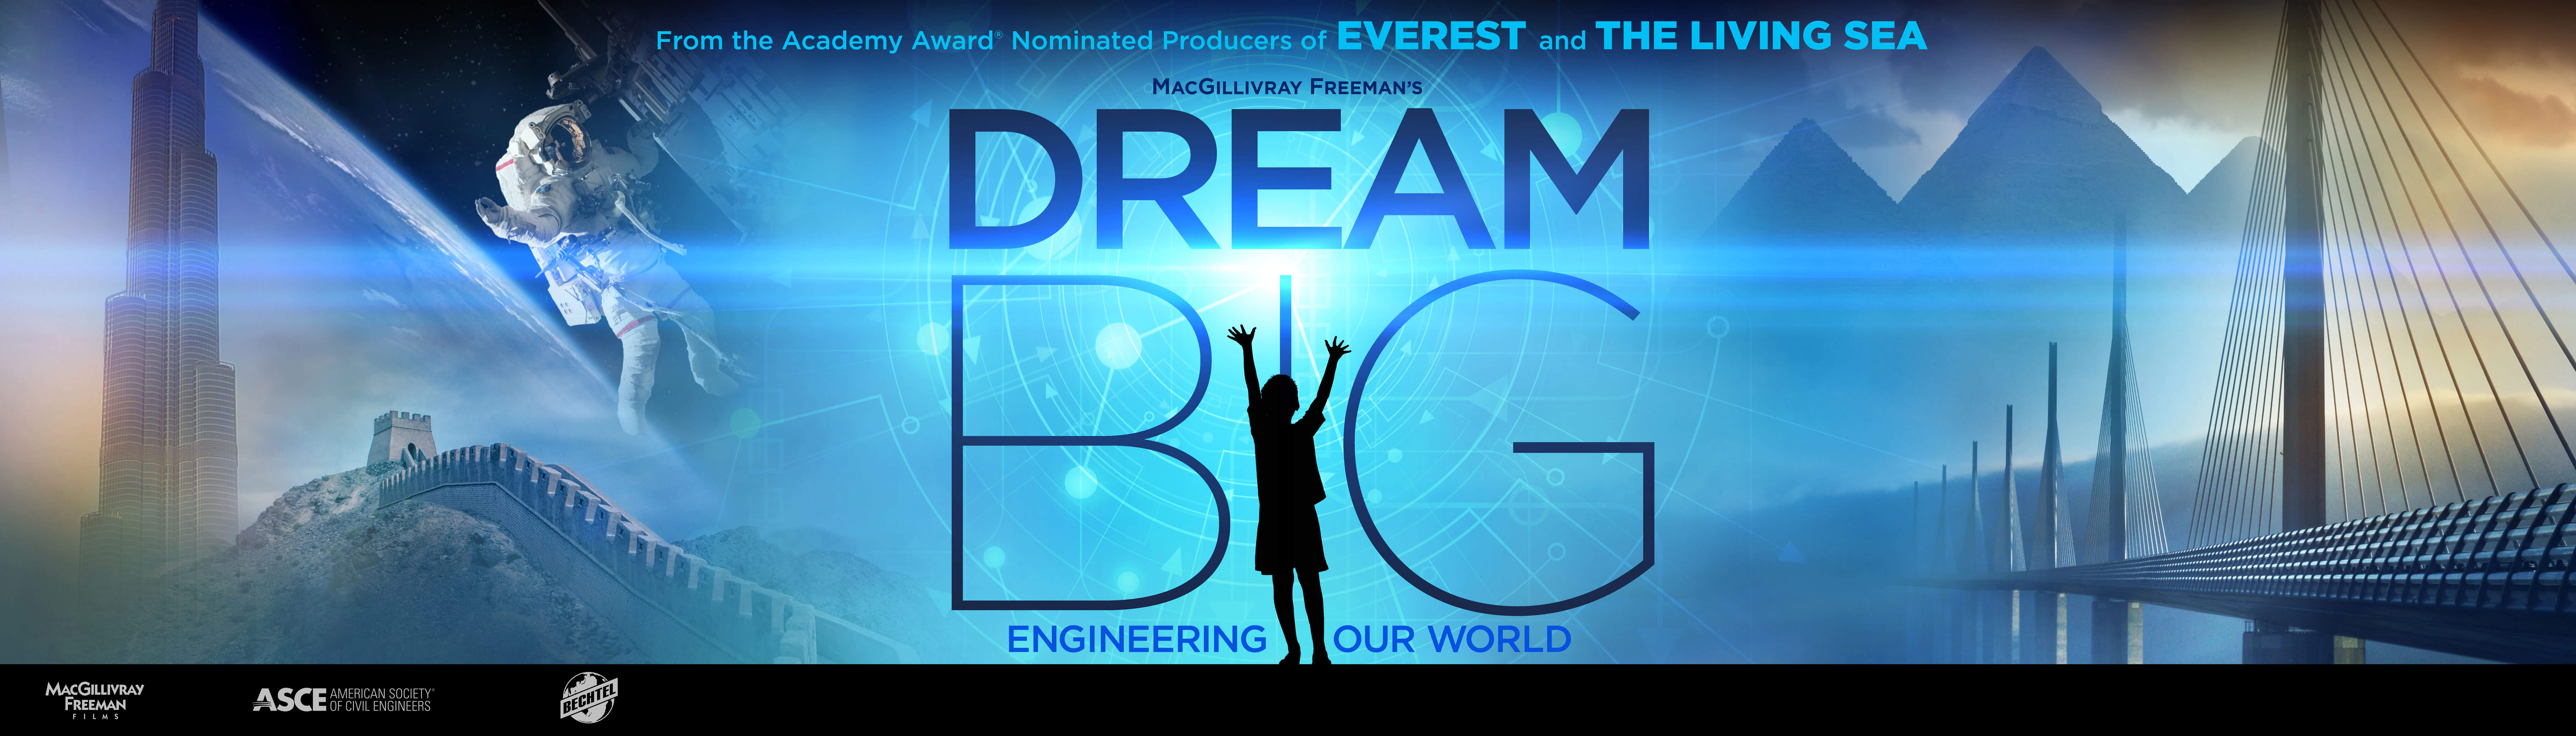 dream big promotional banner